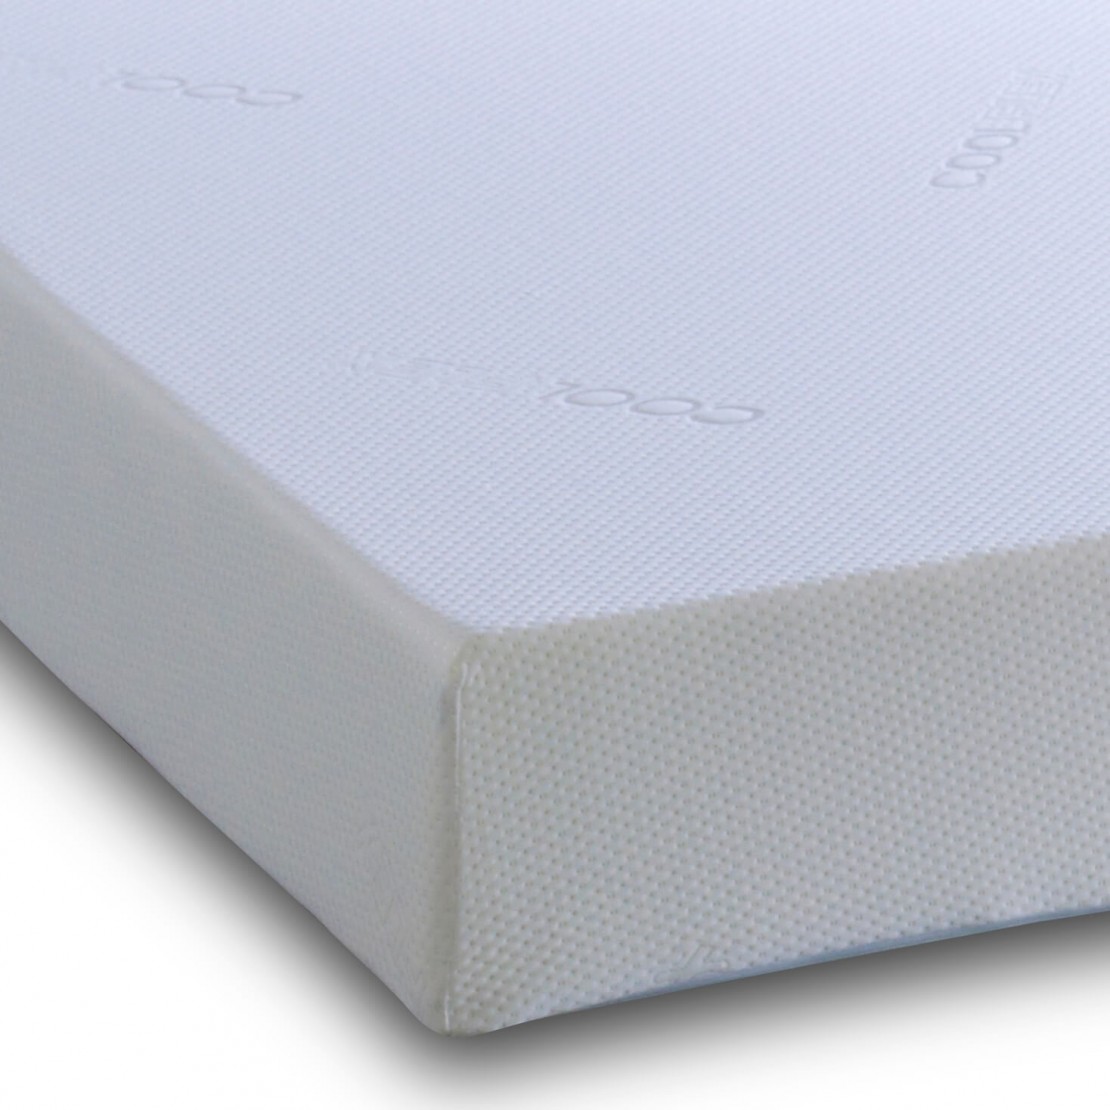 /_images/product-photos/visco-therapy-memory-foam-10,000-regular-mattress-a.jpg